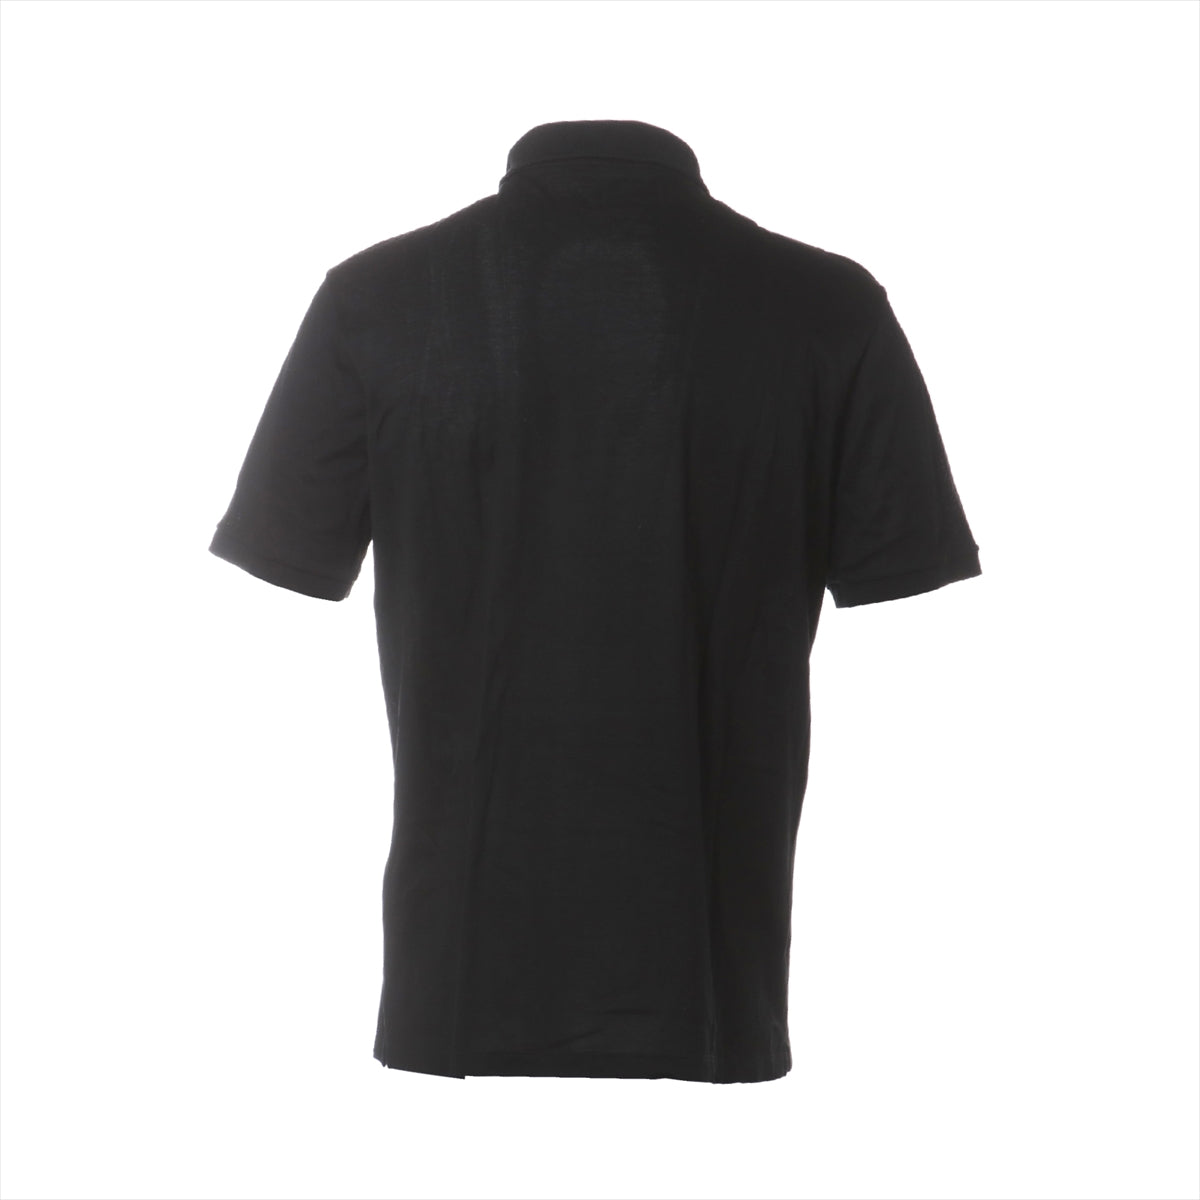 Louis Vuitton 22AW Cotton Polo shirt L Men's Black  RM222Q LV Circle